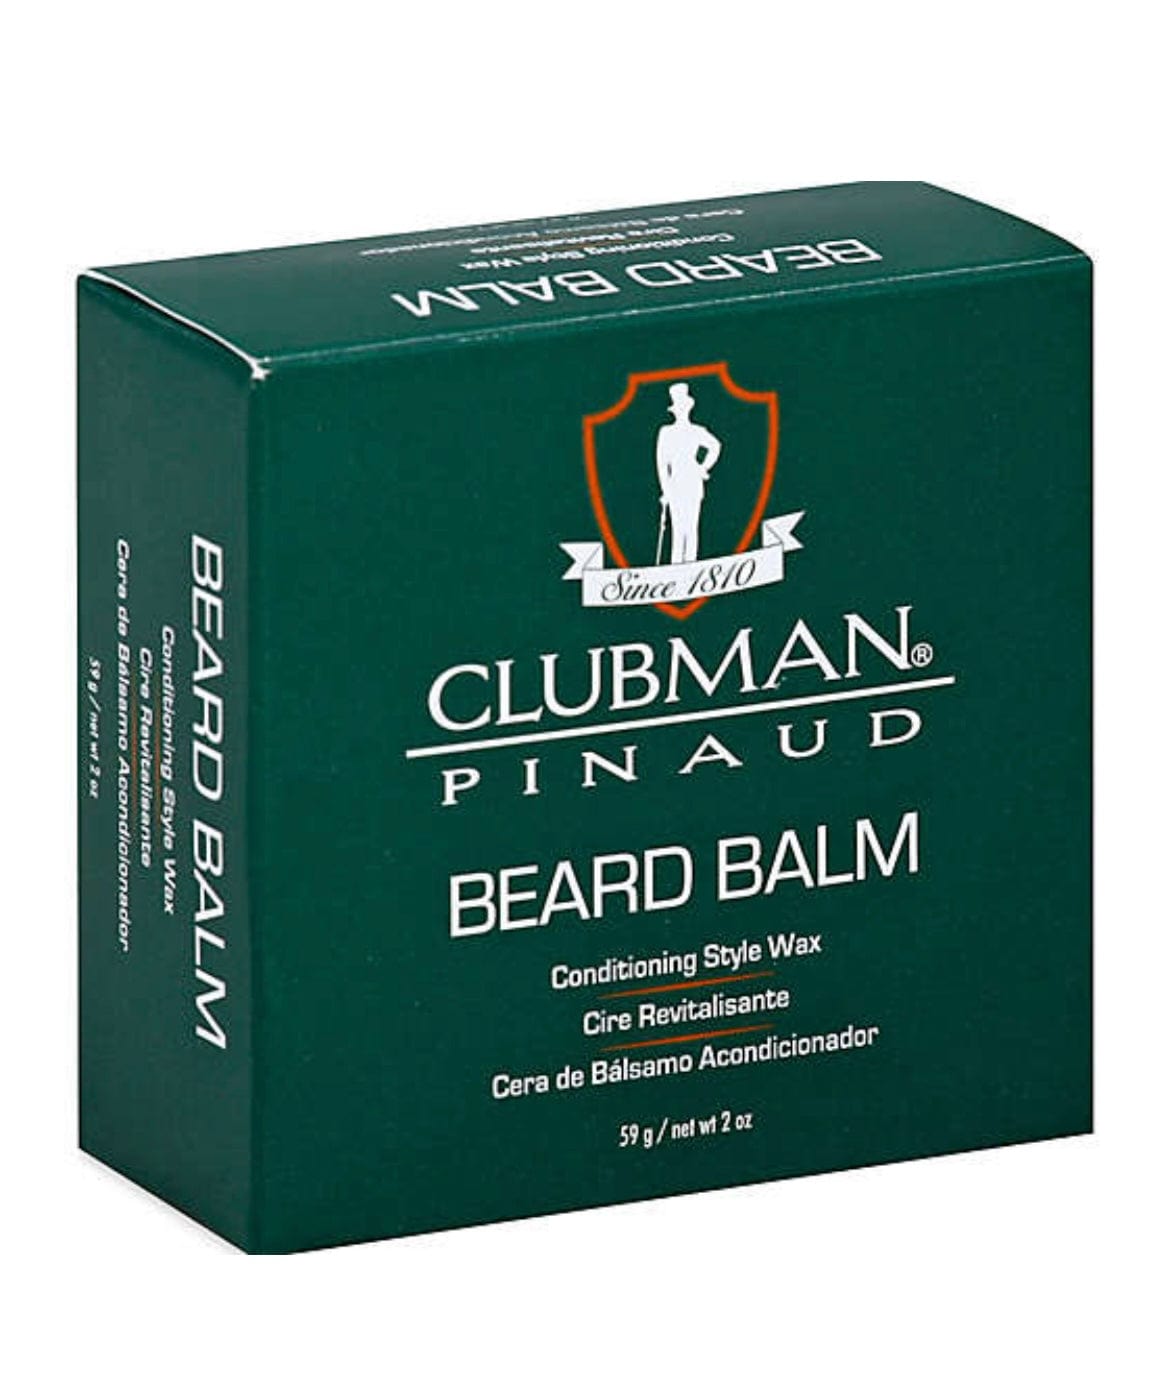 Beard Balm Clubman Pinaud 2 oz Beard Balm